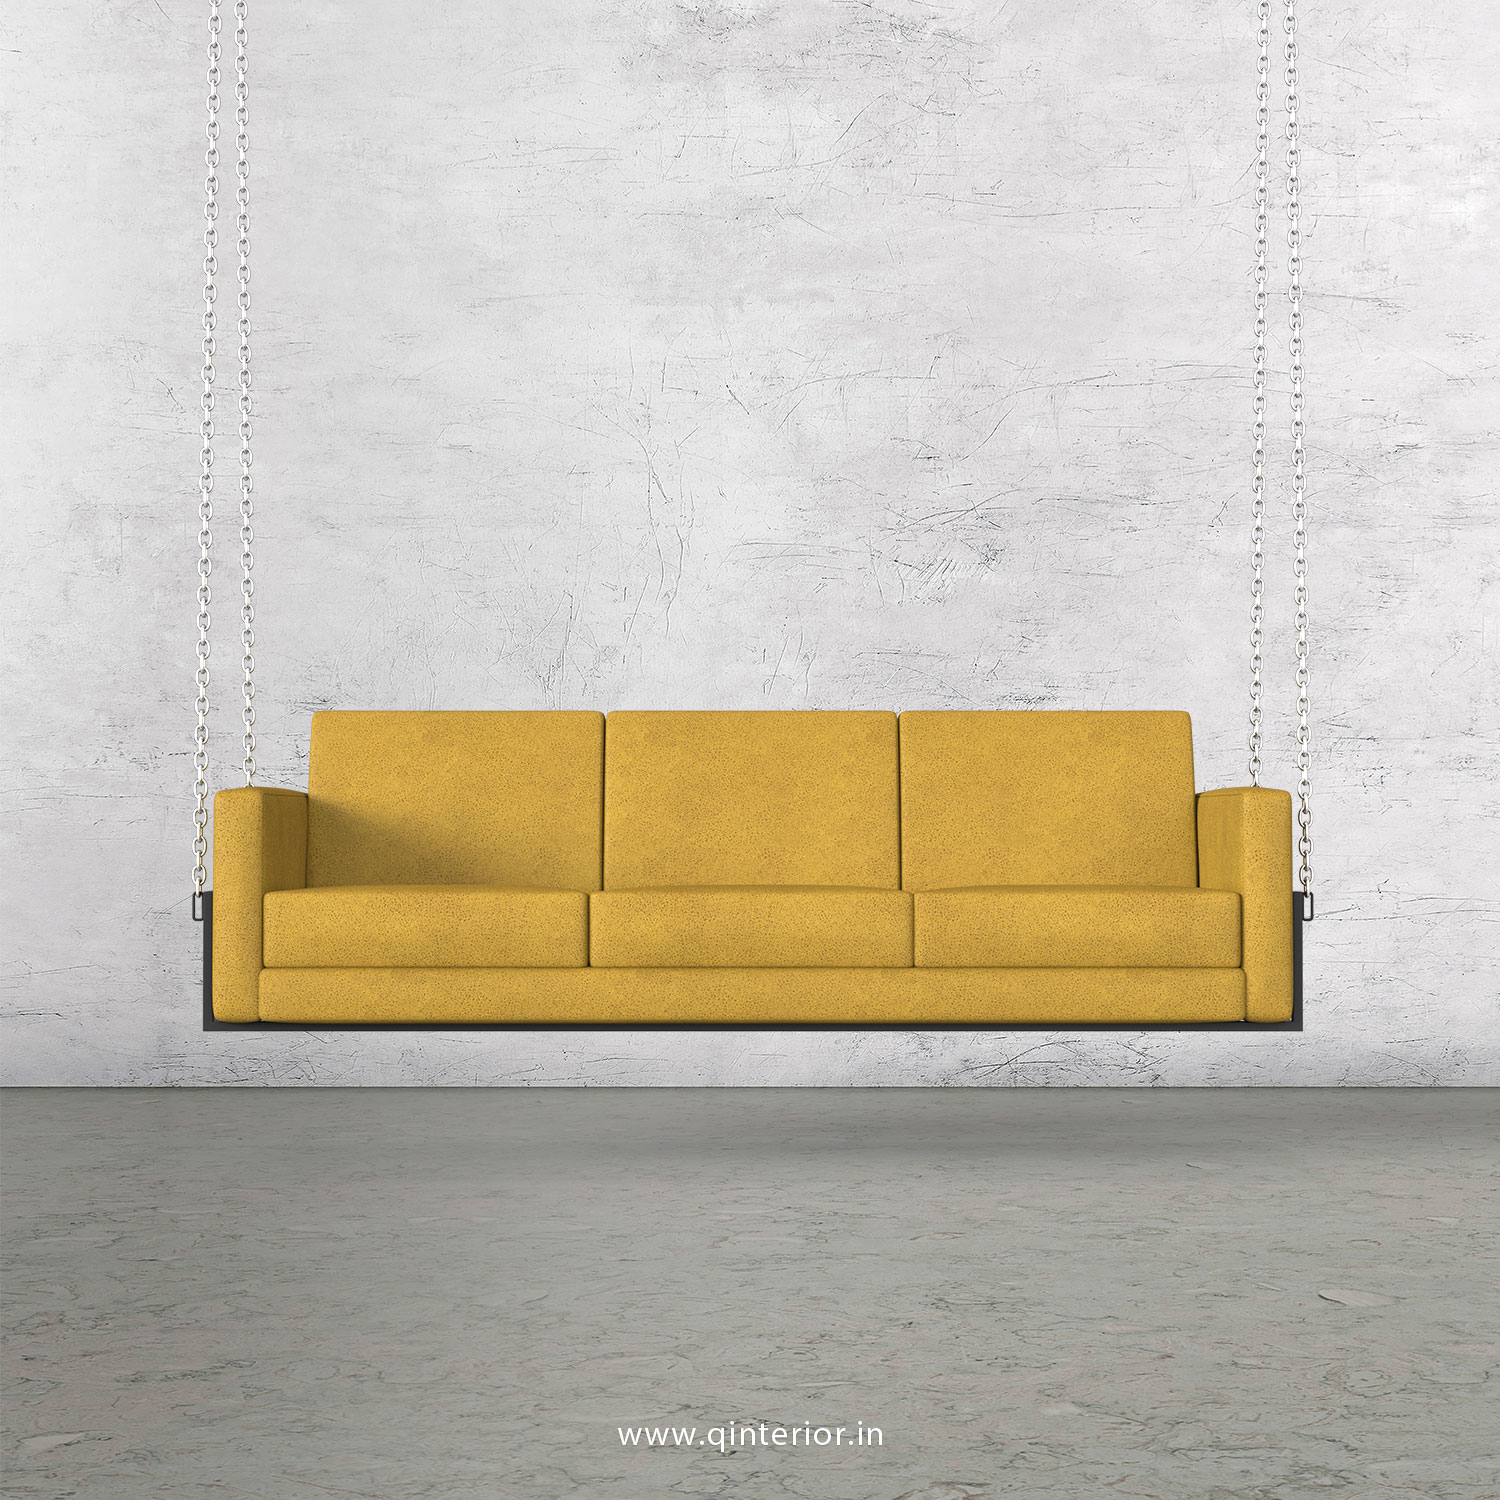 NIRVANA 3 Seater Swing Sofa in Fab Leather Fabric - SSF001 FL18